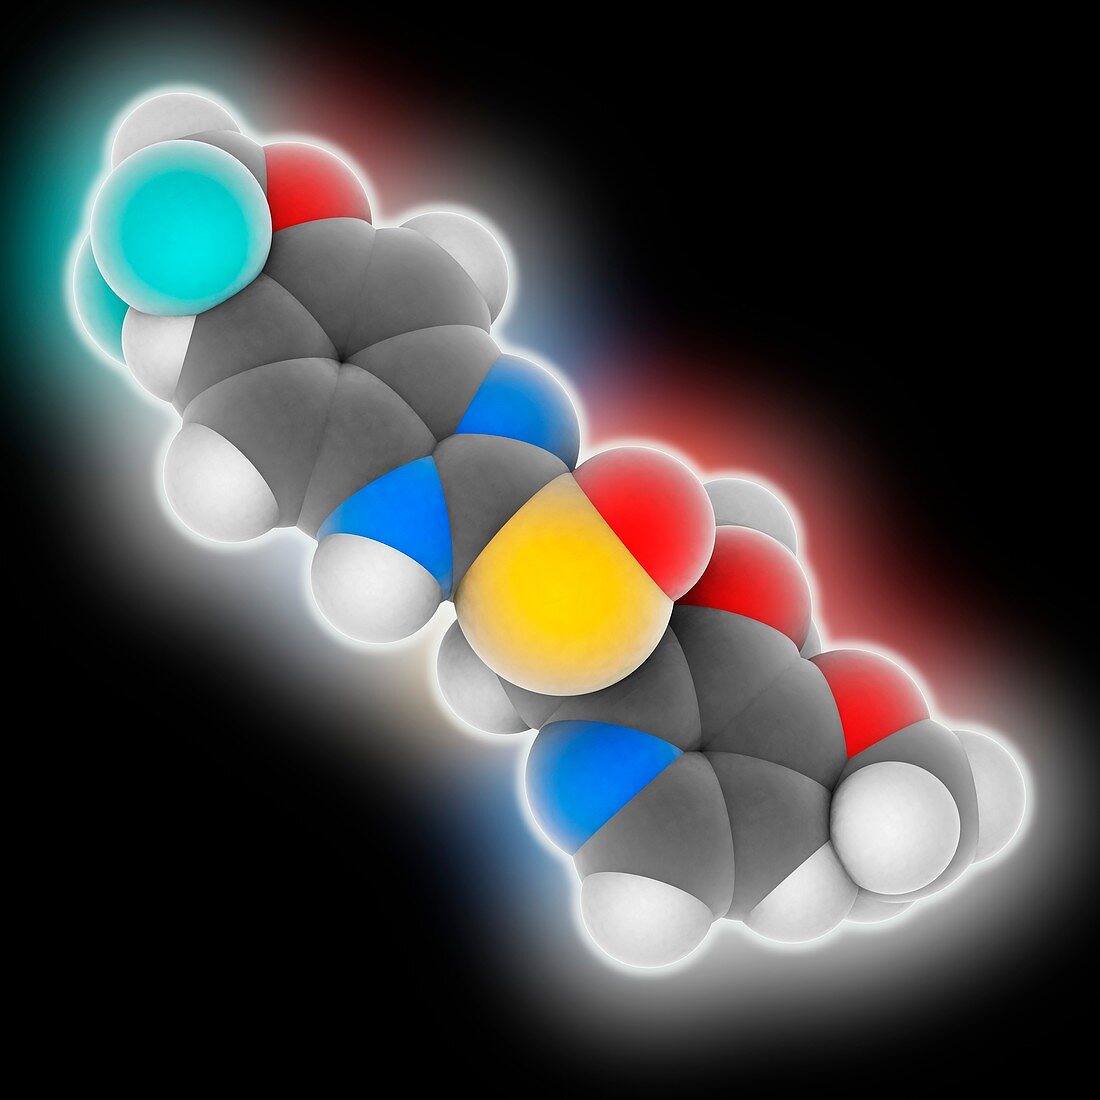 Pantoprazole drug molecule